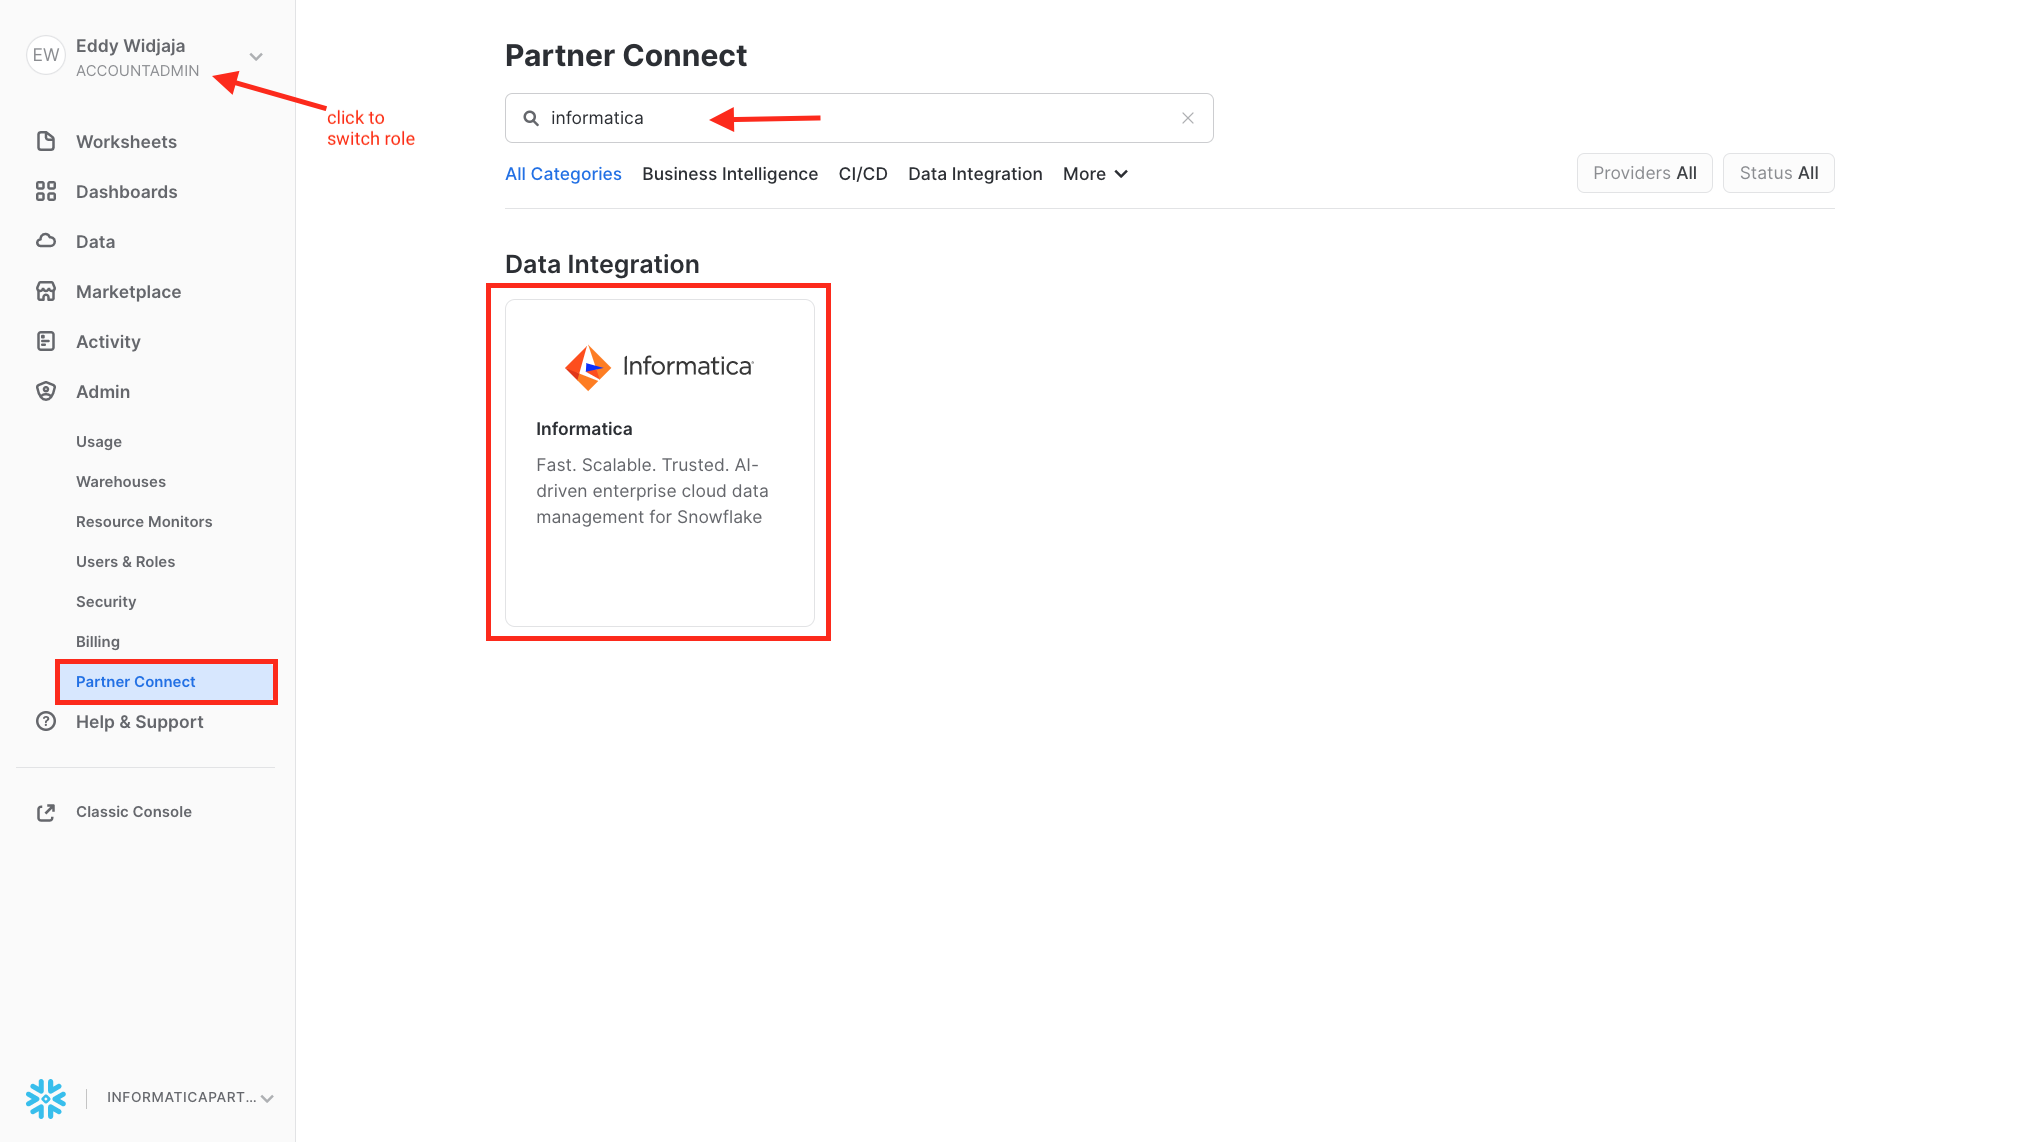 PartnerConnect